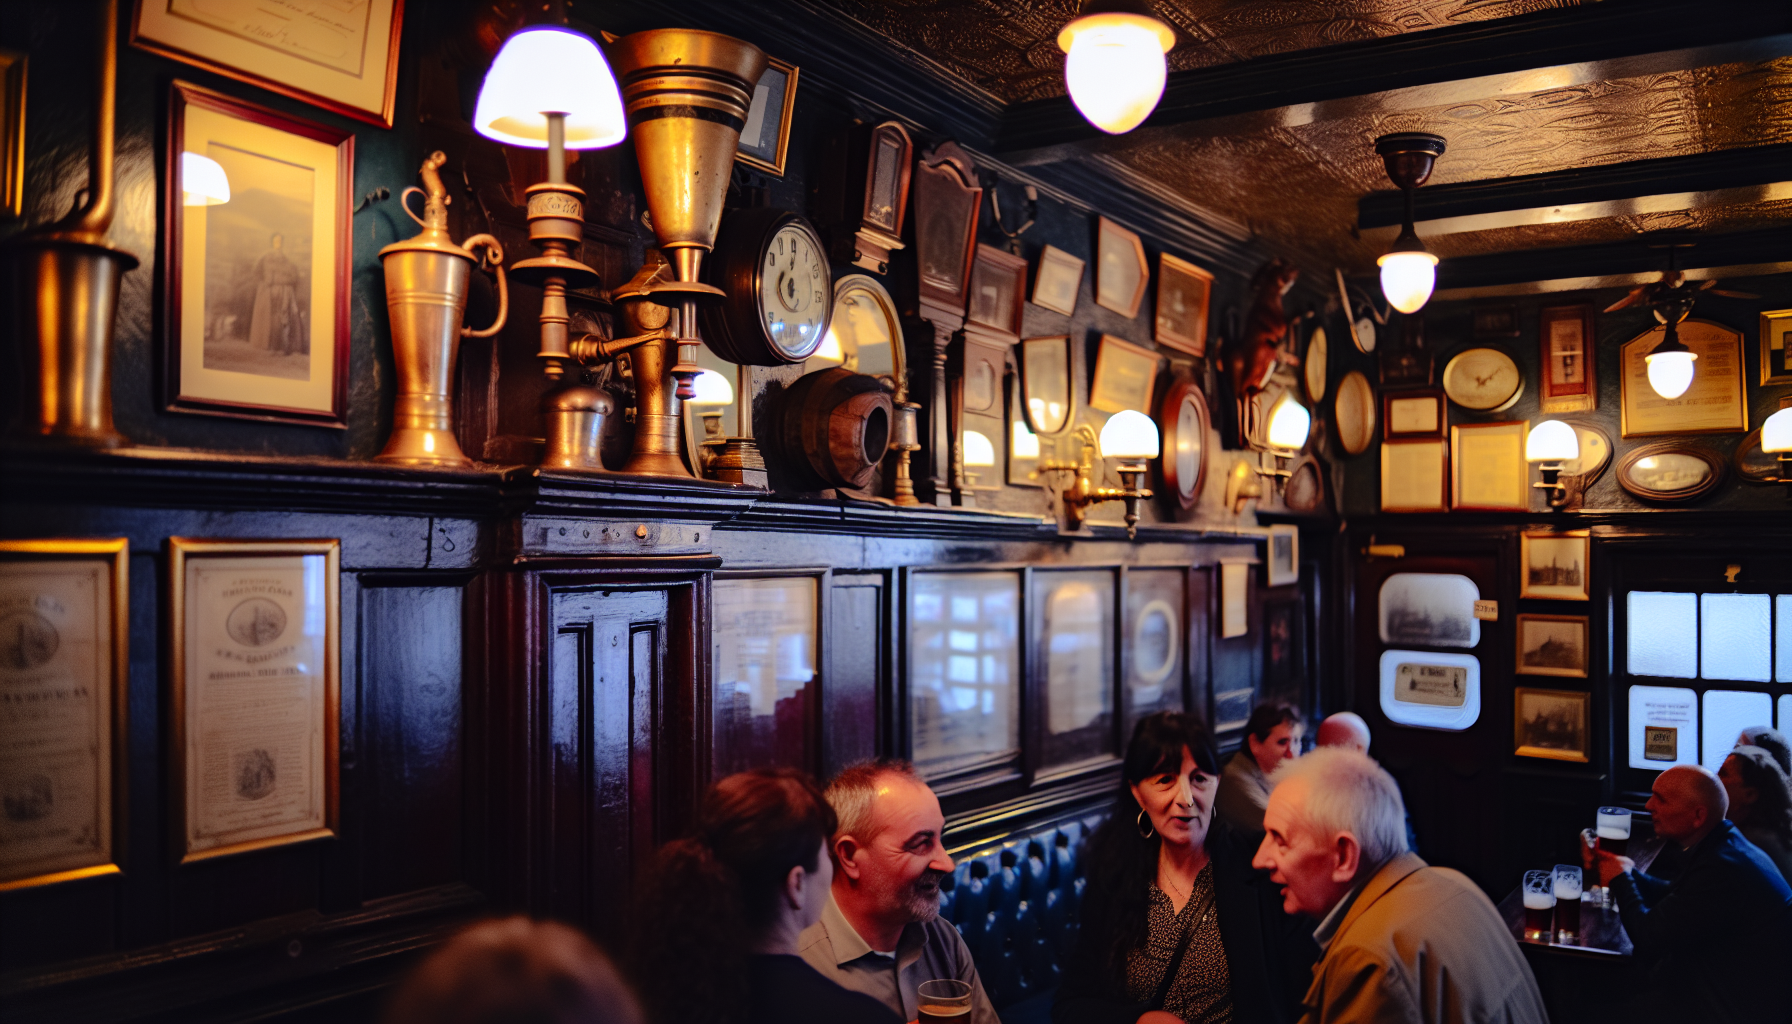 Historic pub interior with traditional decor